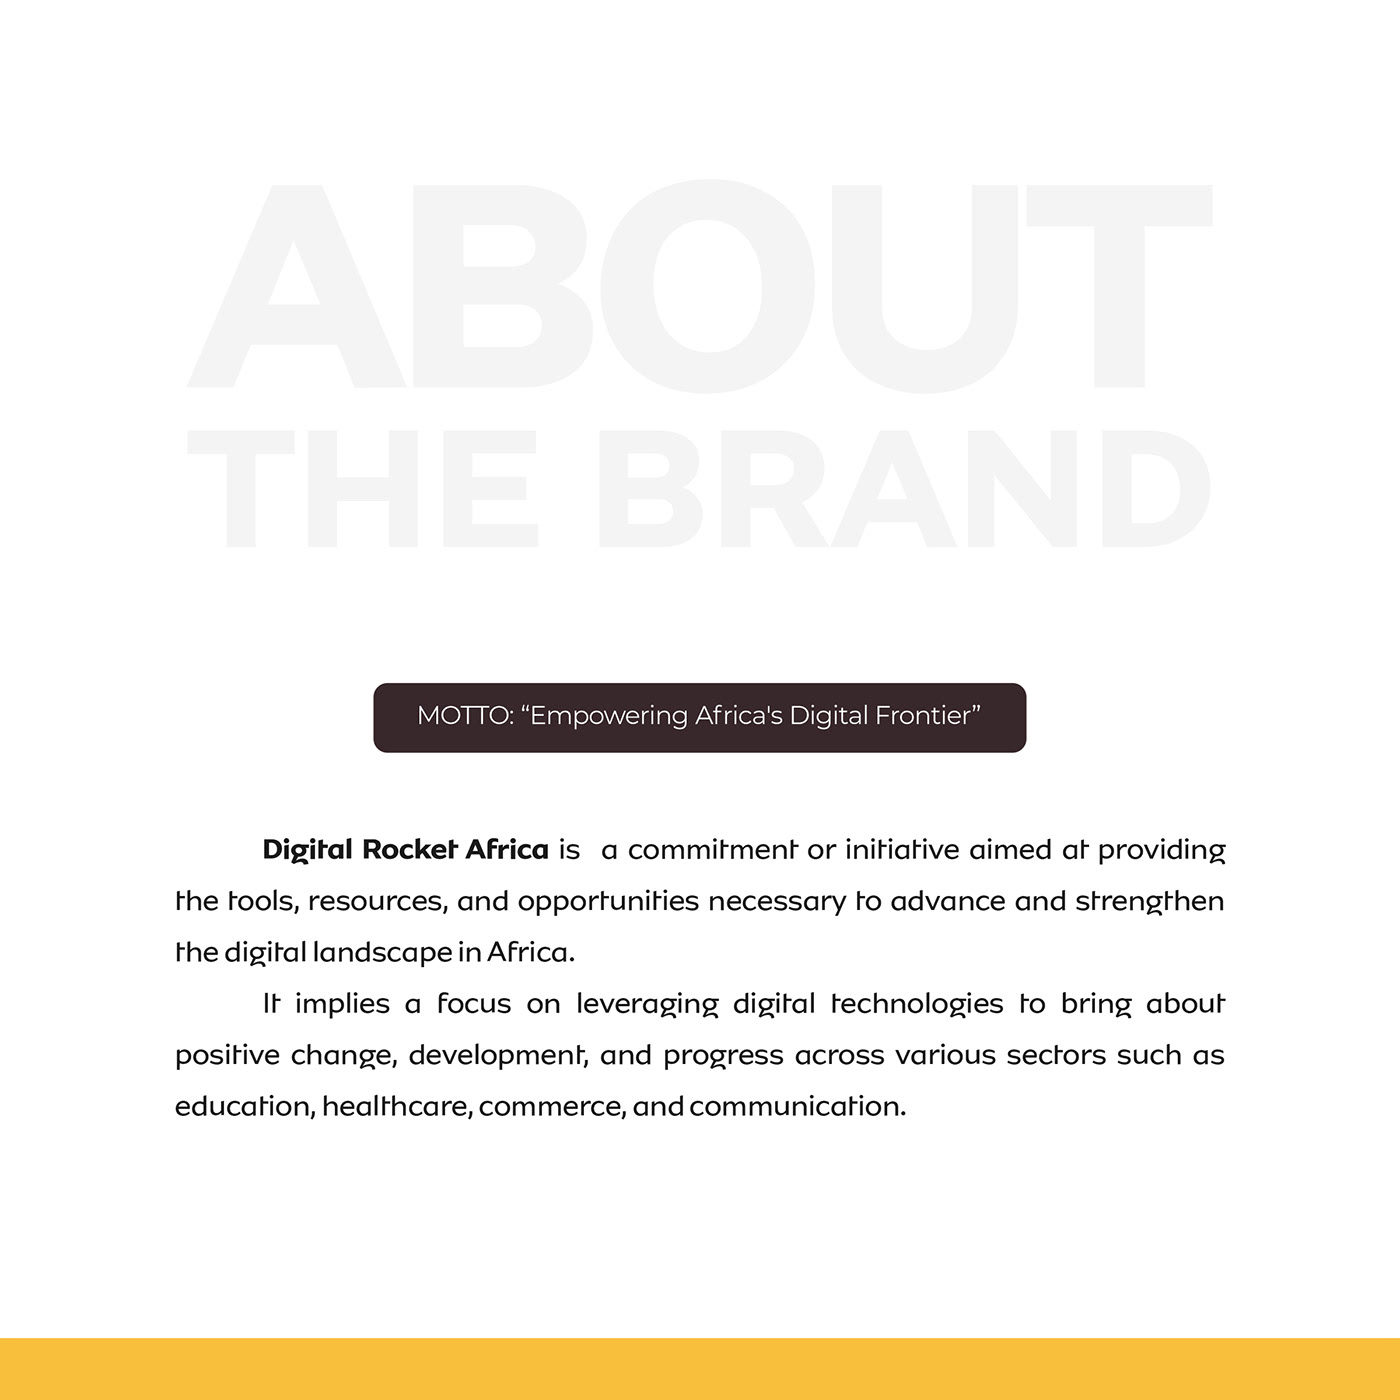 design visual identity brand logos identity digital rockets africa bird peregrine falcon